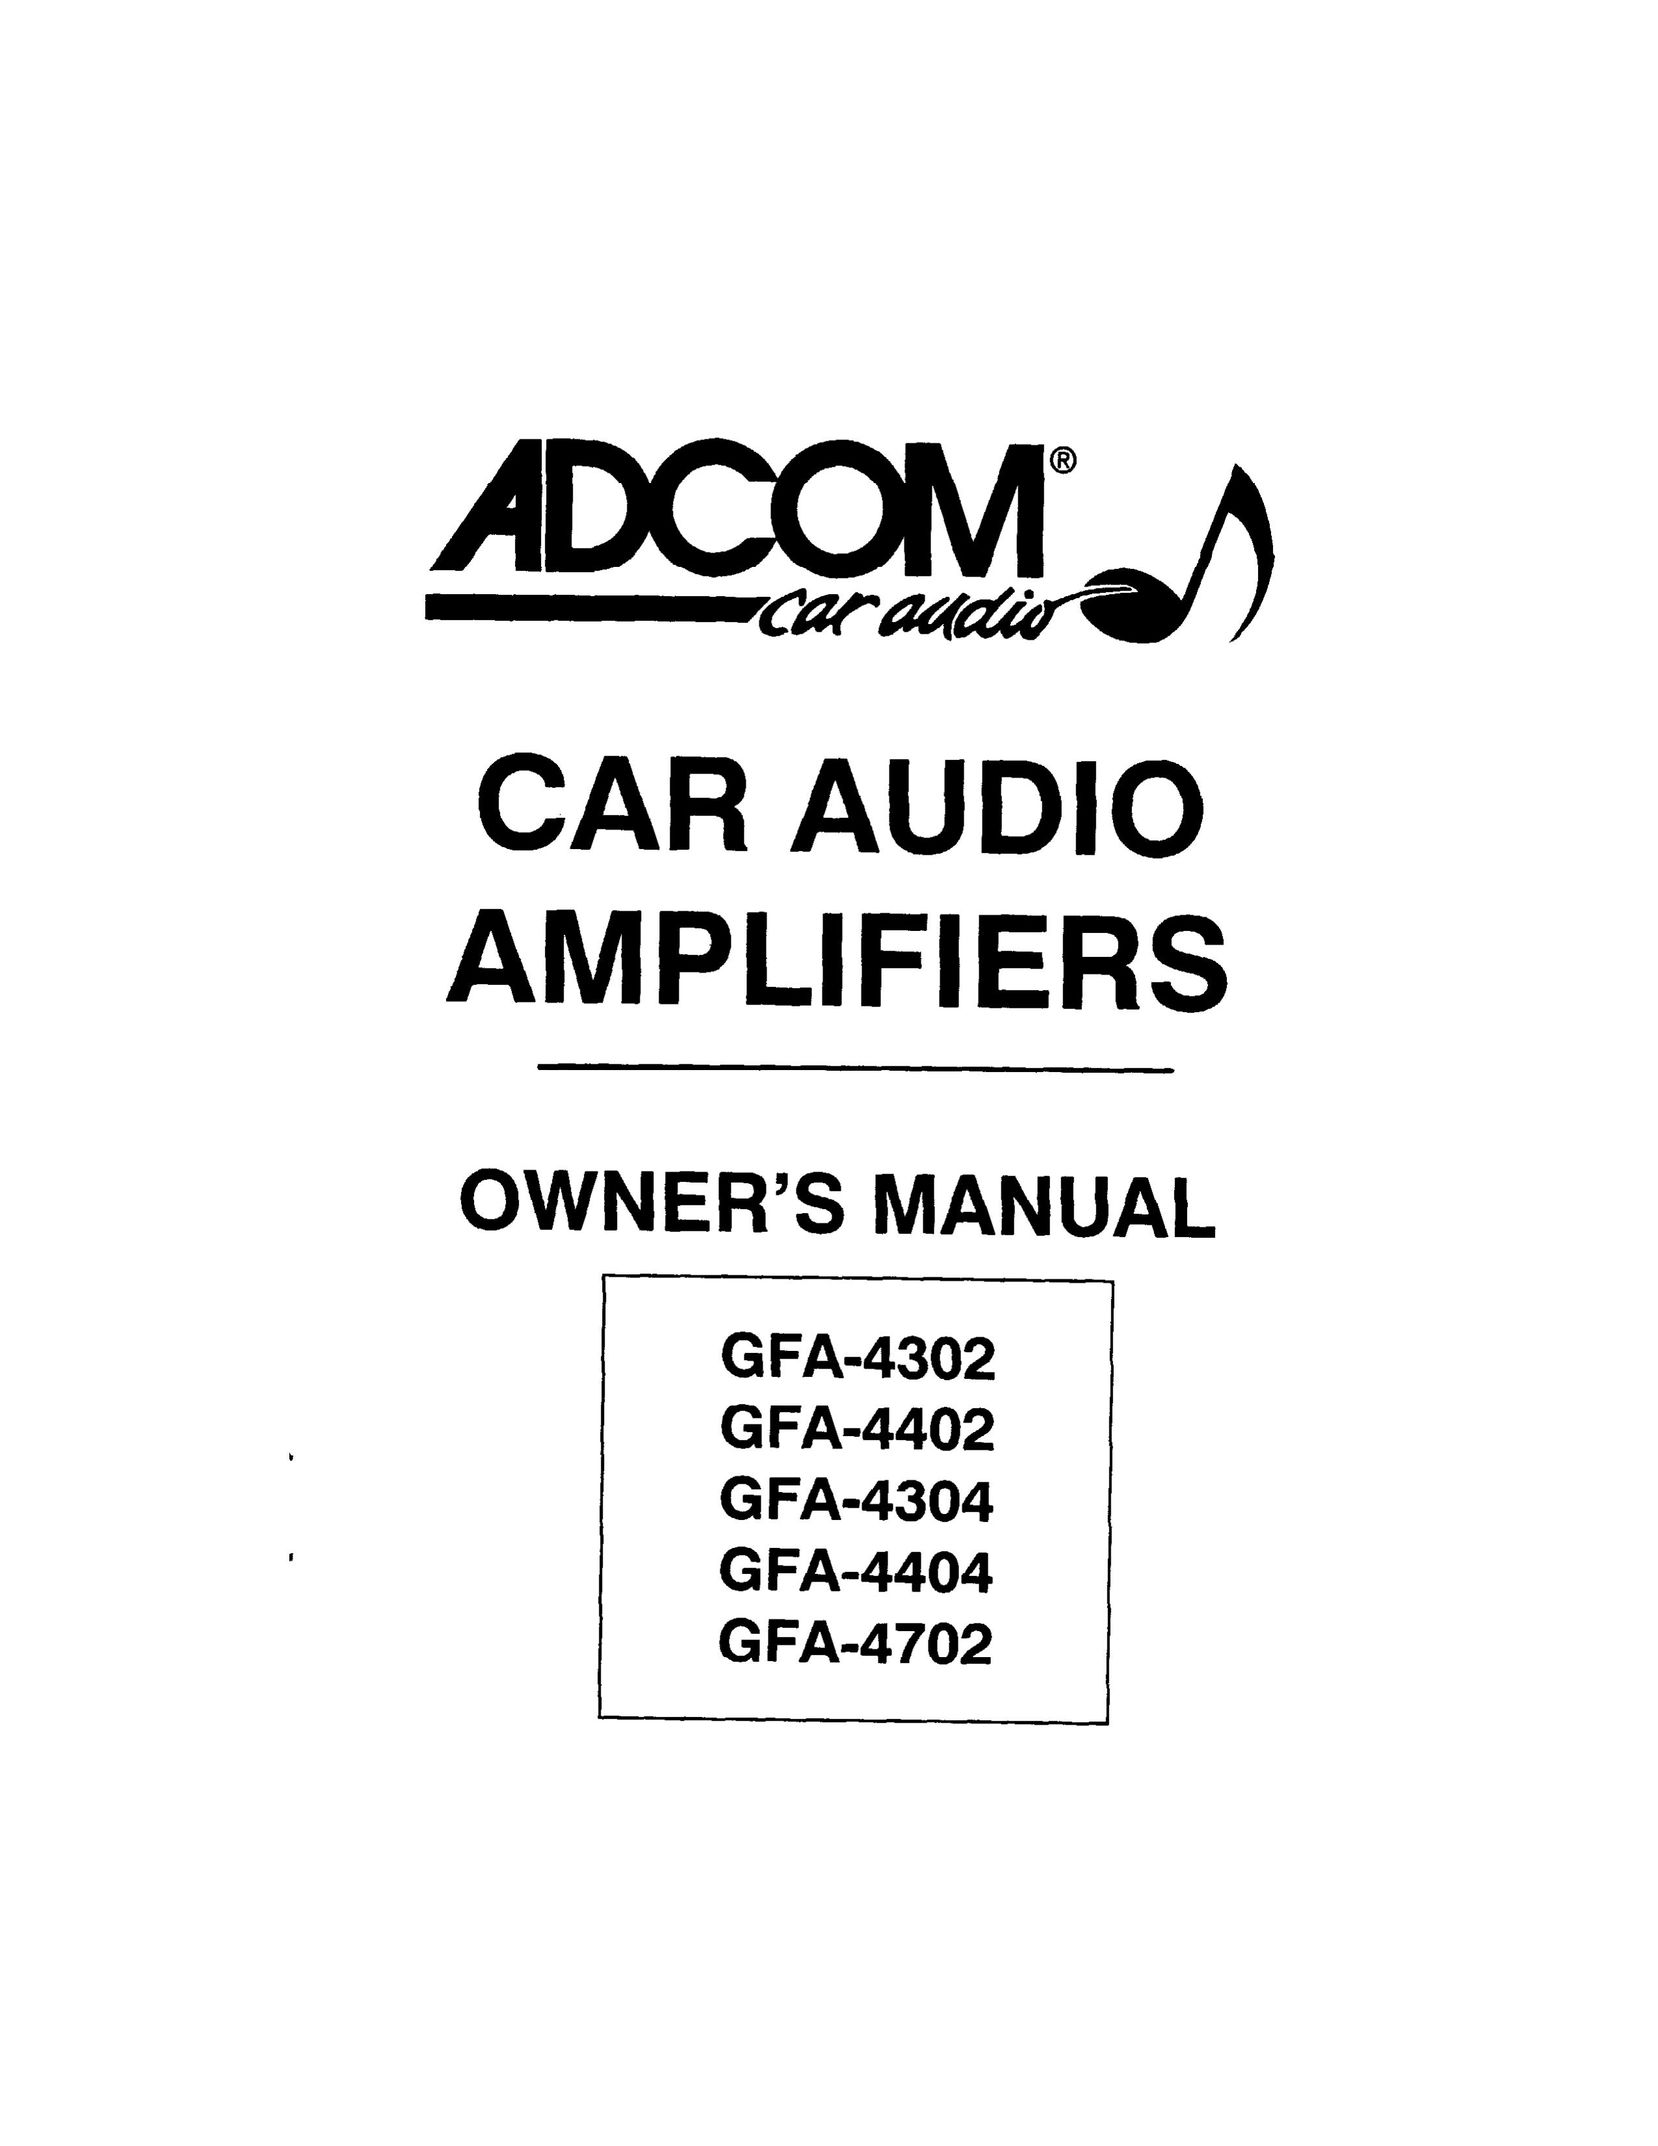 Adcom GFA-4302 Car Amplifier User Manual